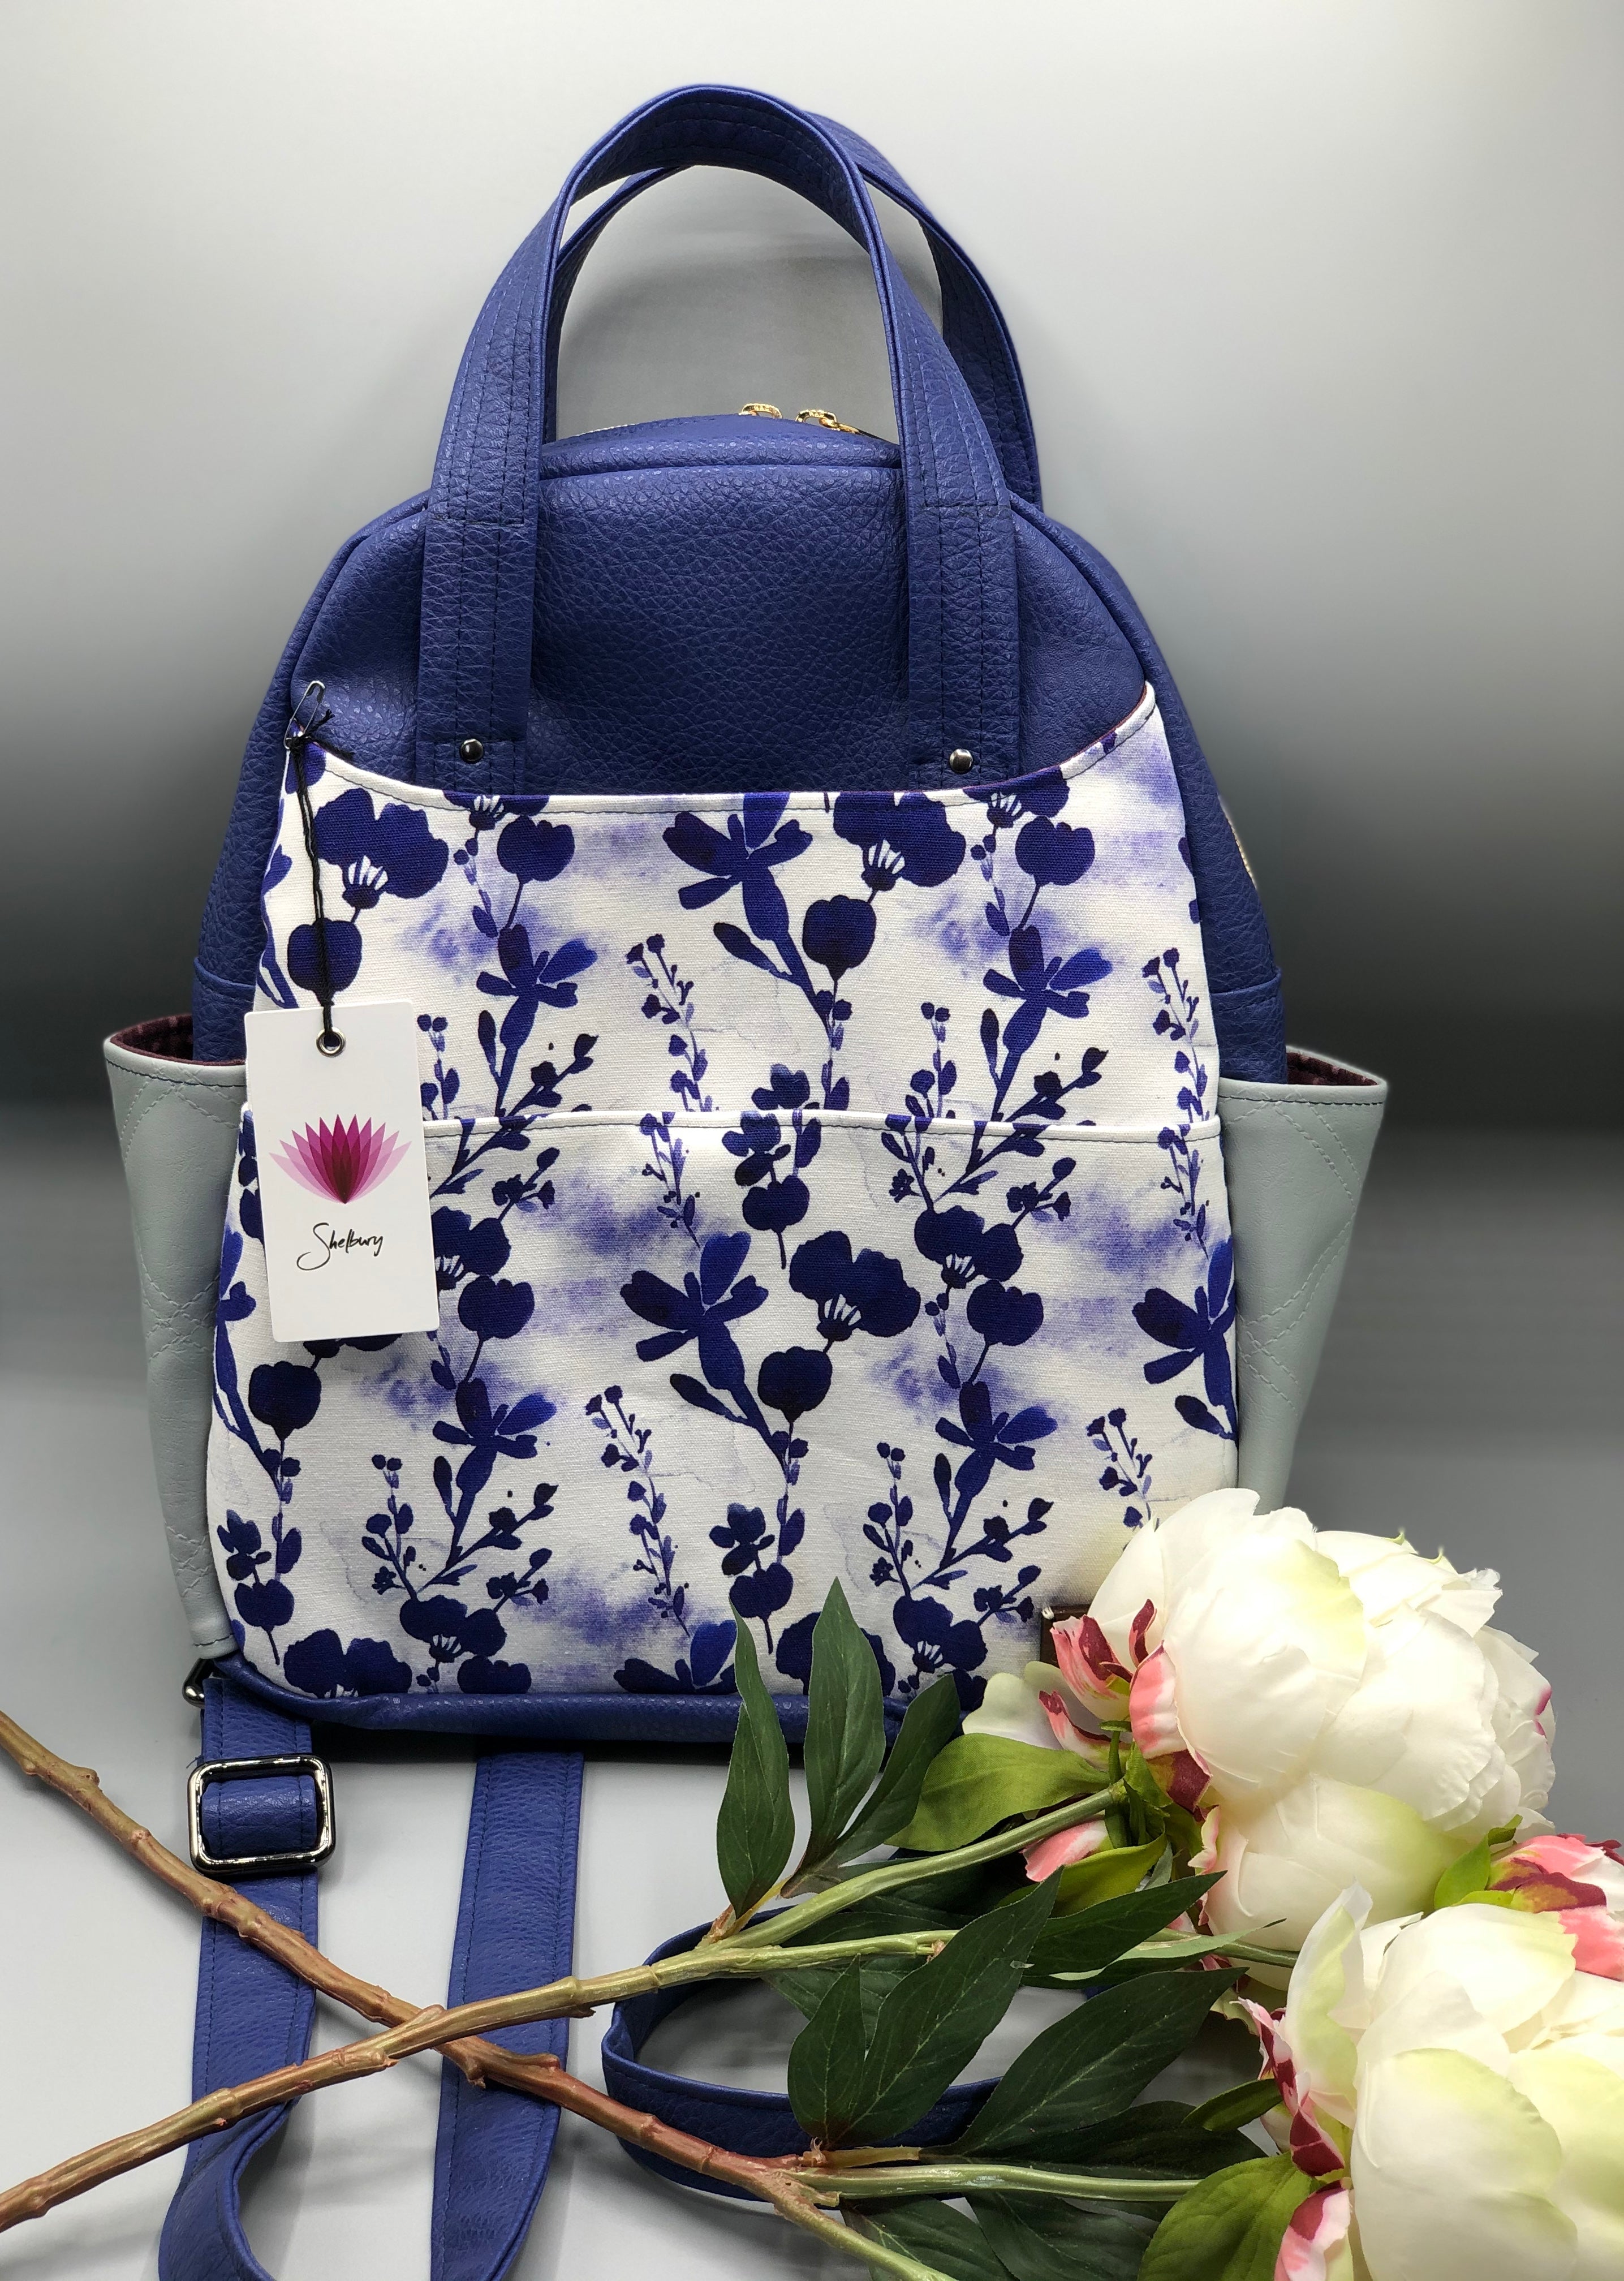 Top Strap Backpack - Indigo Blooms Canvas